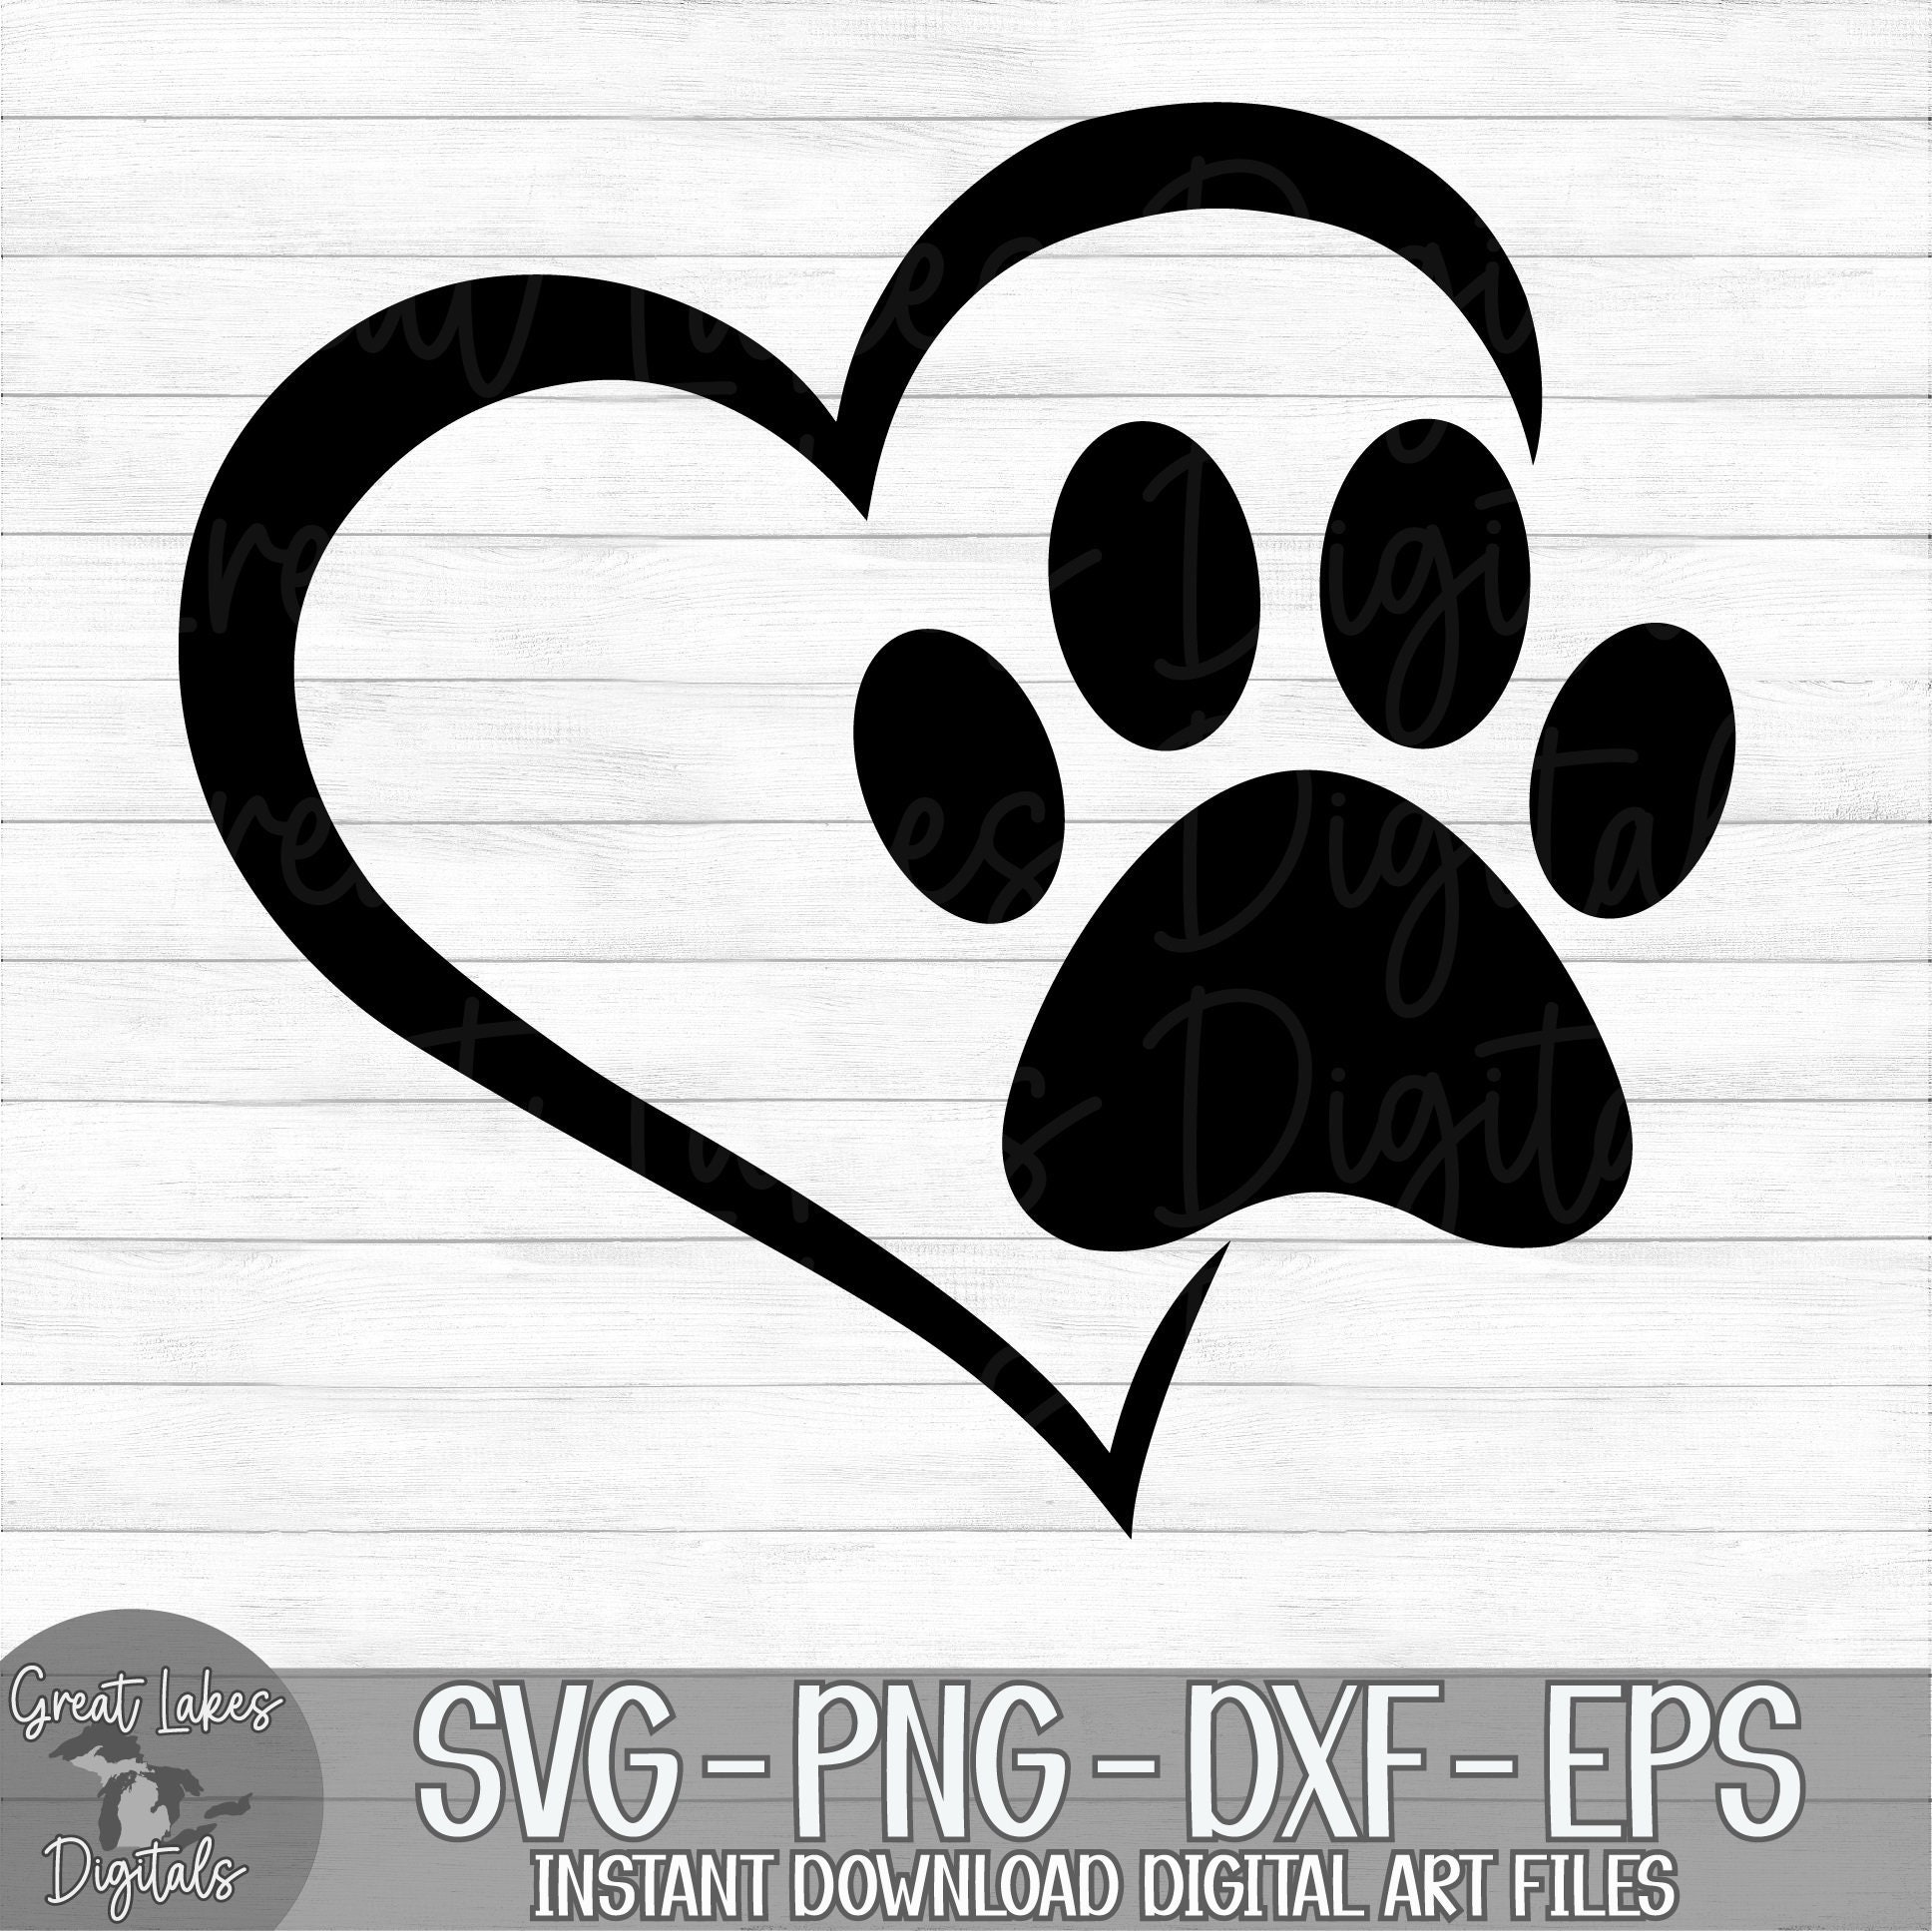 BW Cute Dog Paw Prints Animal  #35878 2 x Heart Stickers 7.5 cm 